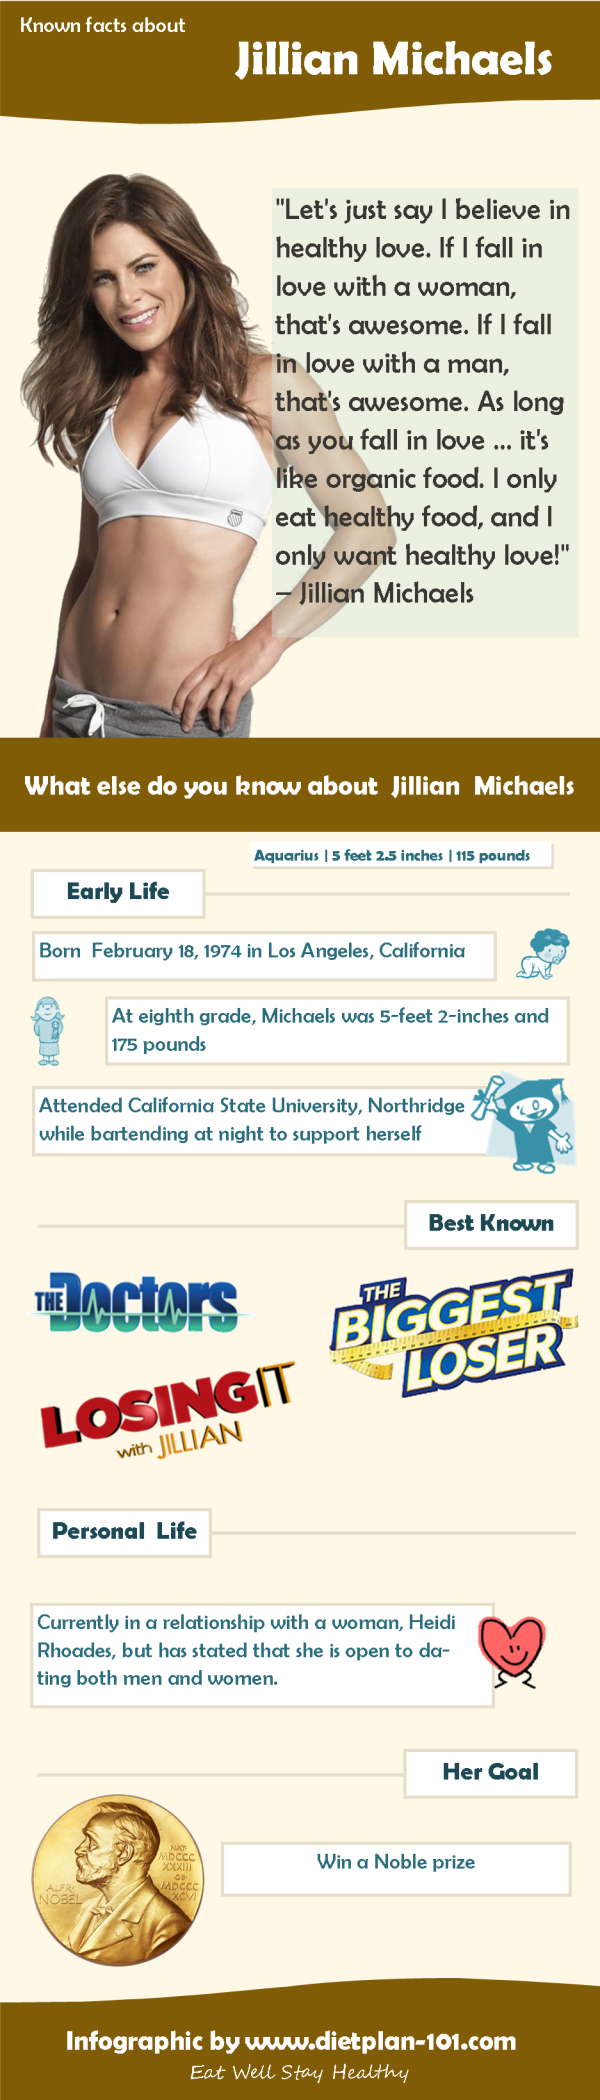 Jillian Michaels infographic